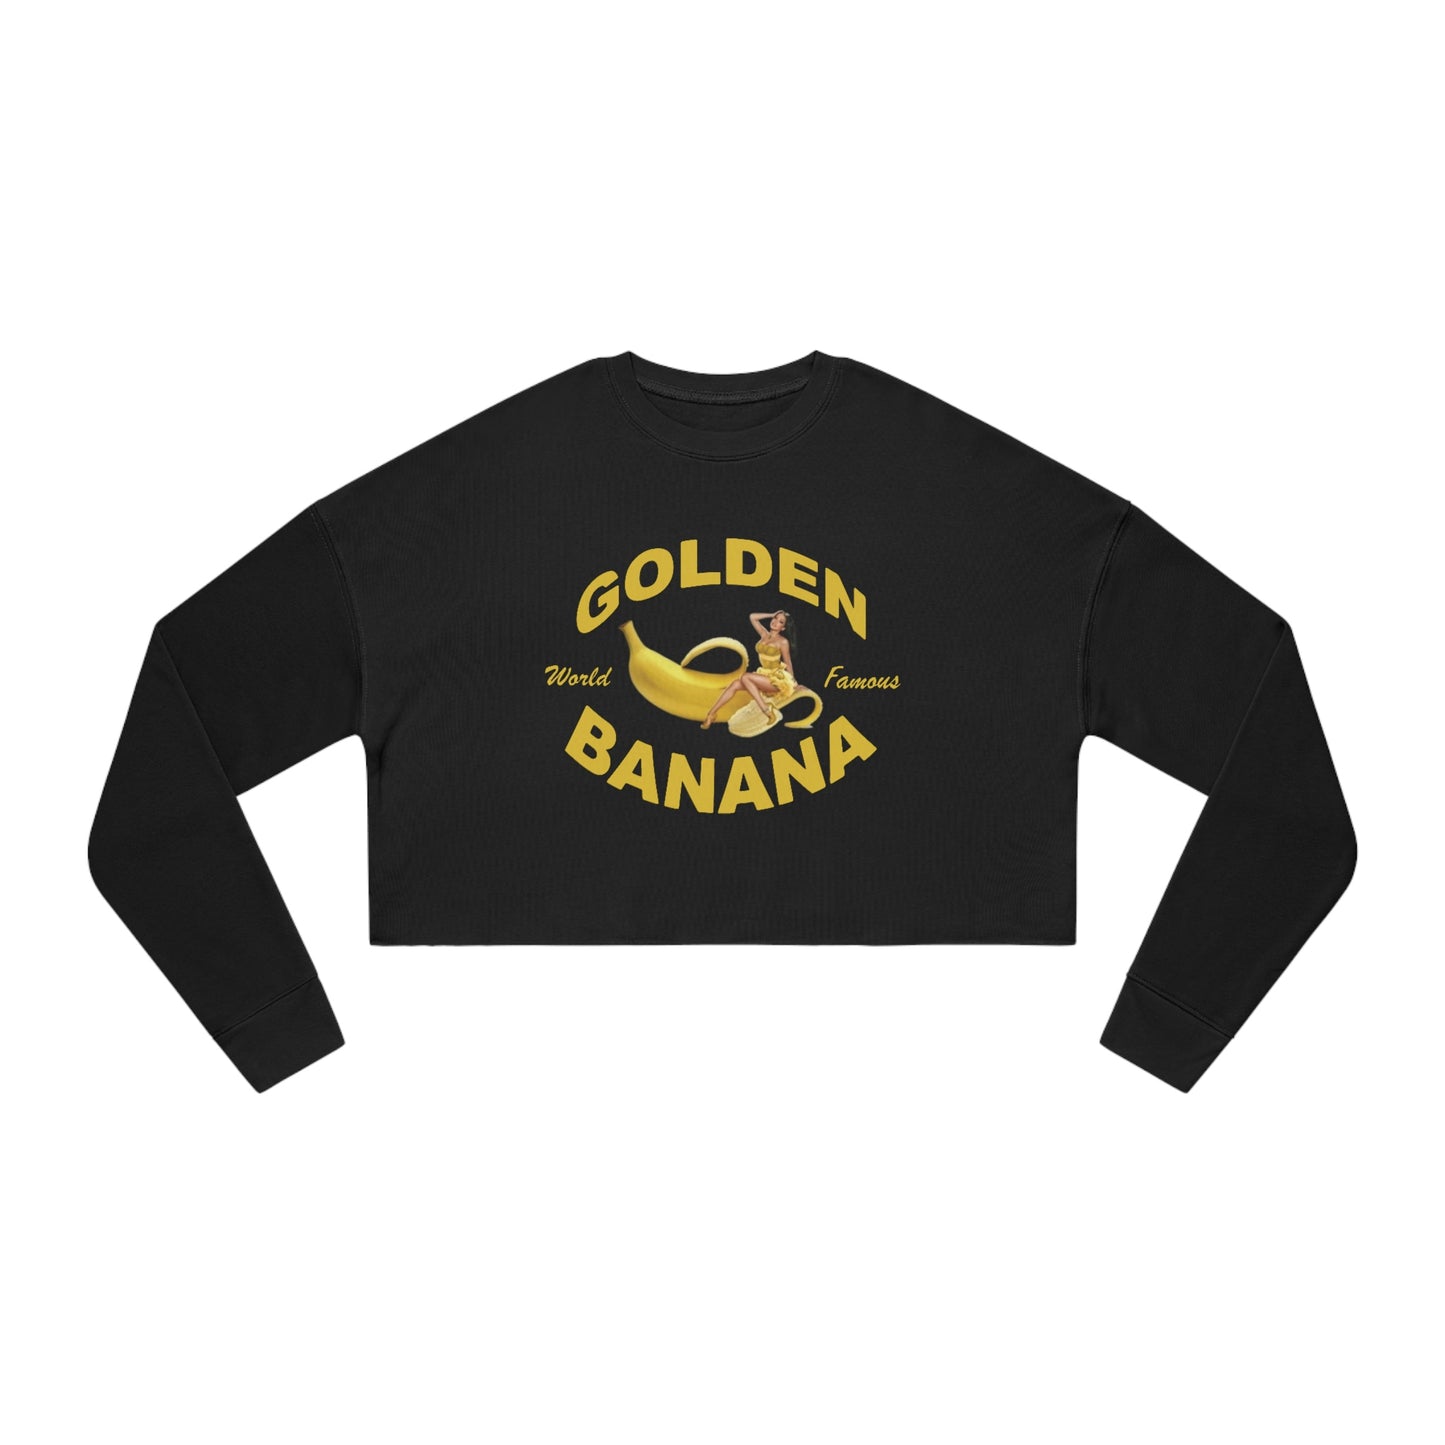 Golden Banana Women's Cropped Sweatshirt